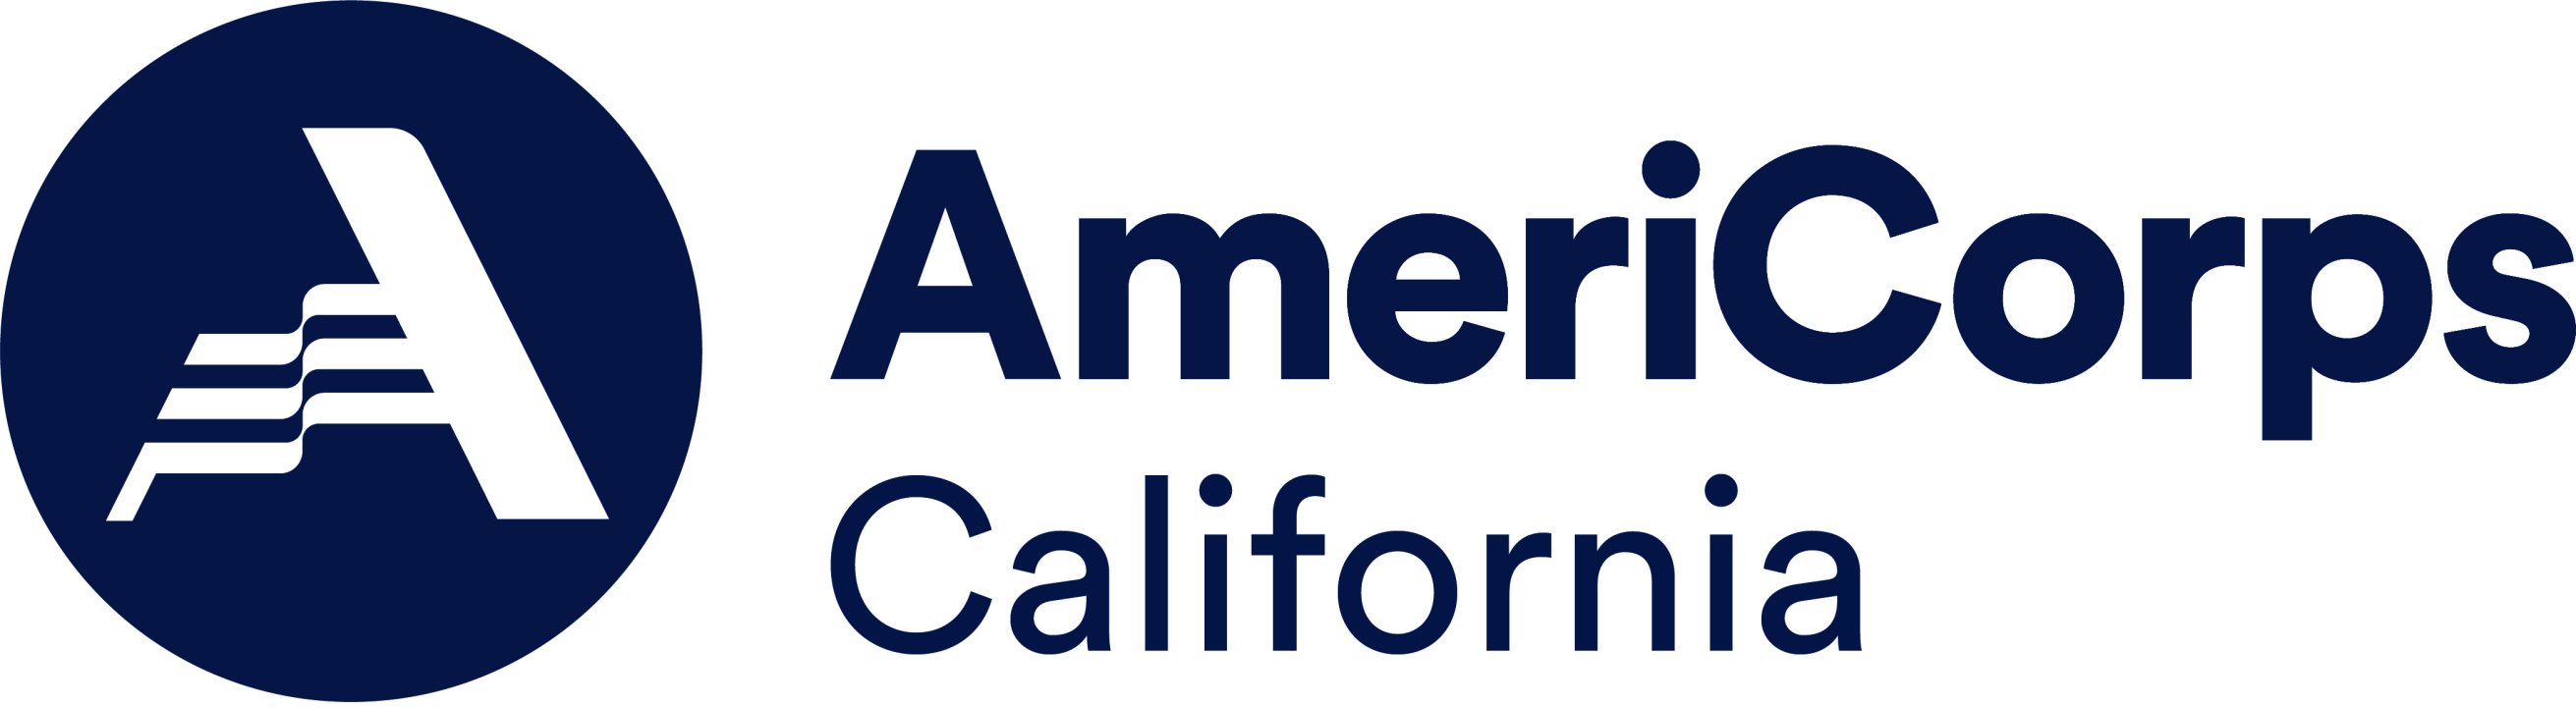 Americorps california logo